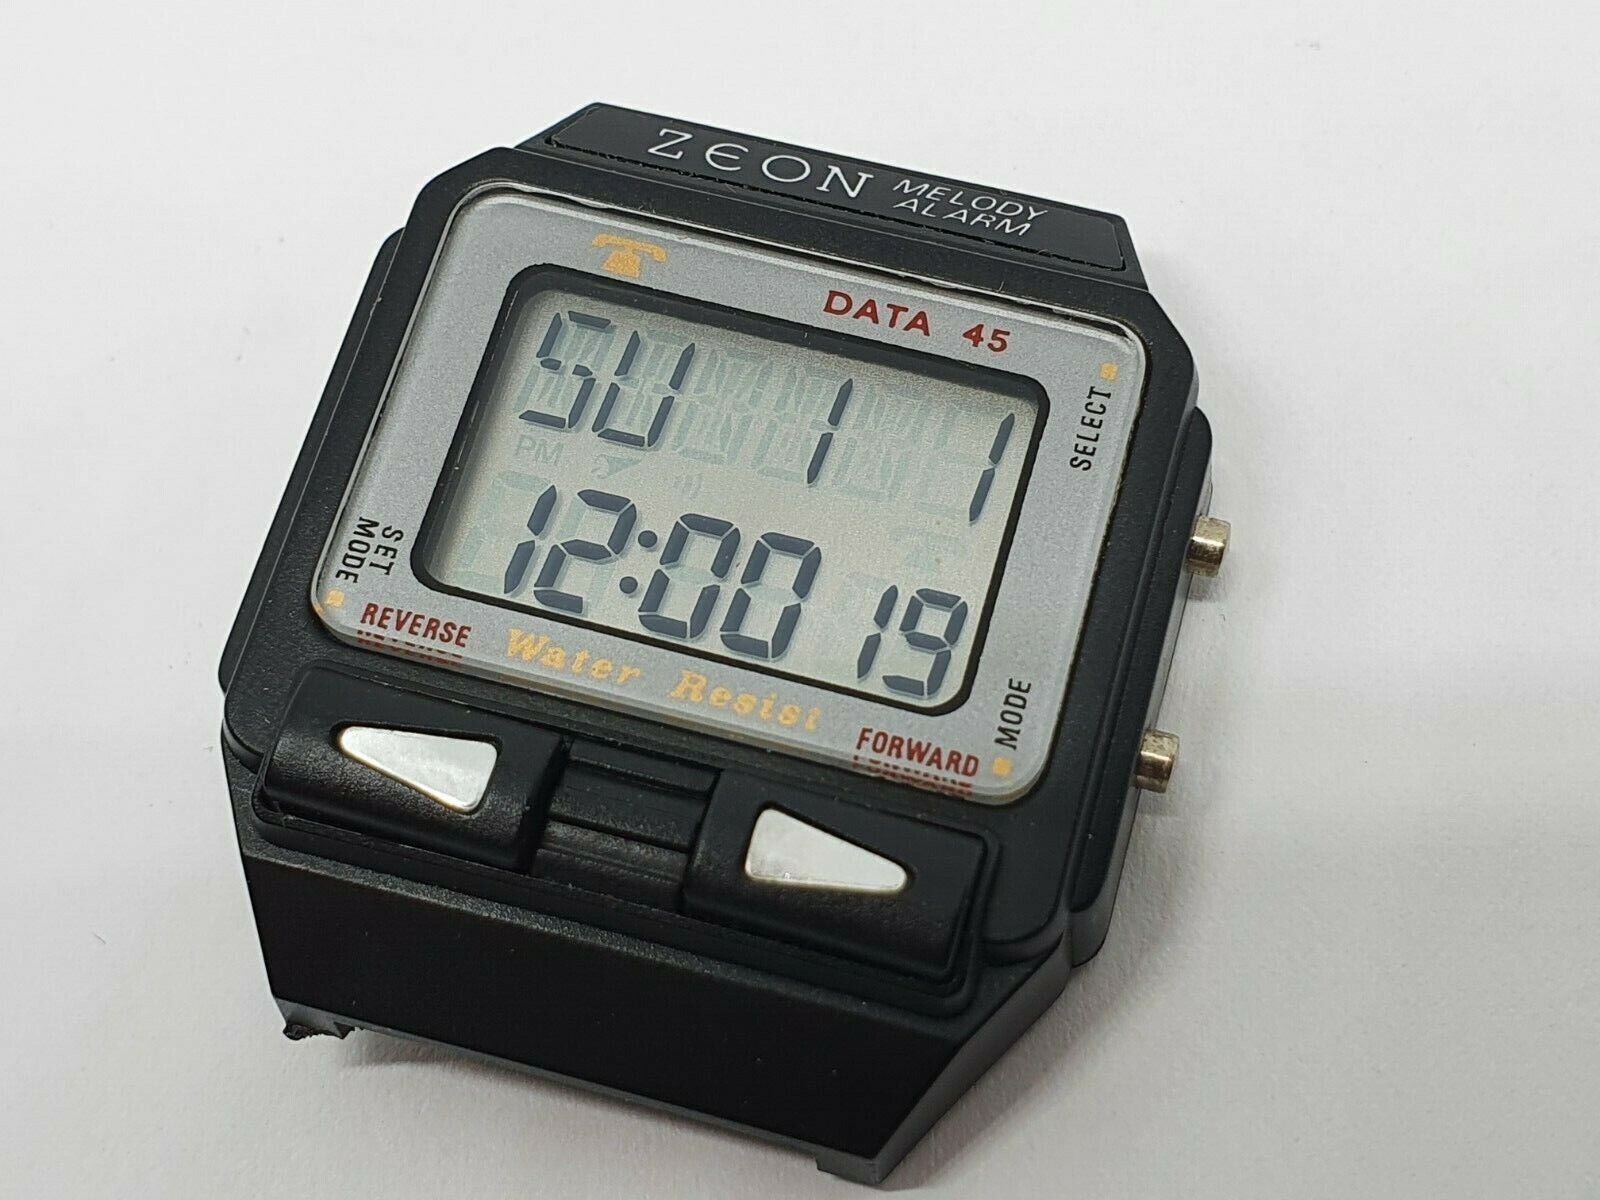 Vintage Digital watch Zeon Melody Alarm Data 45